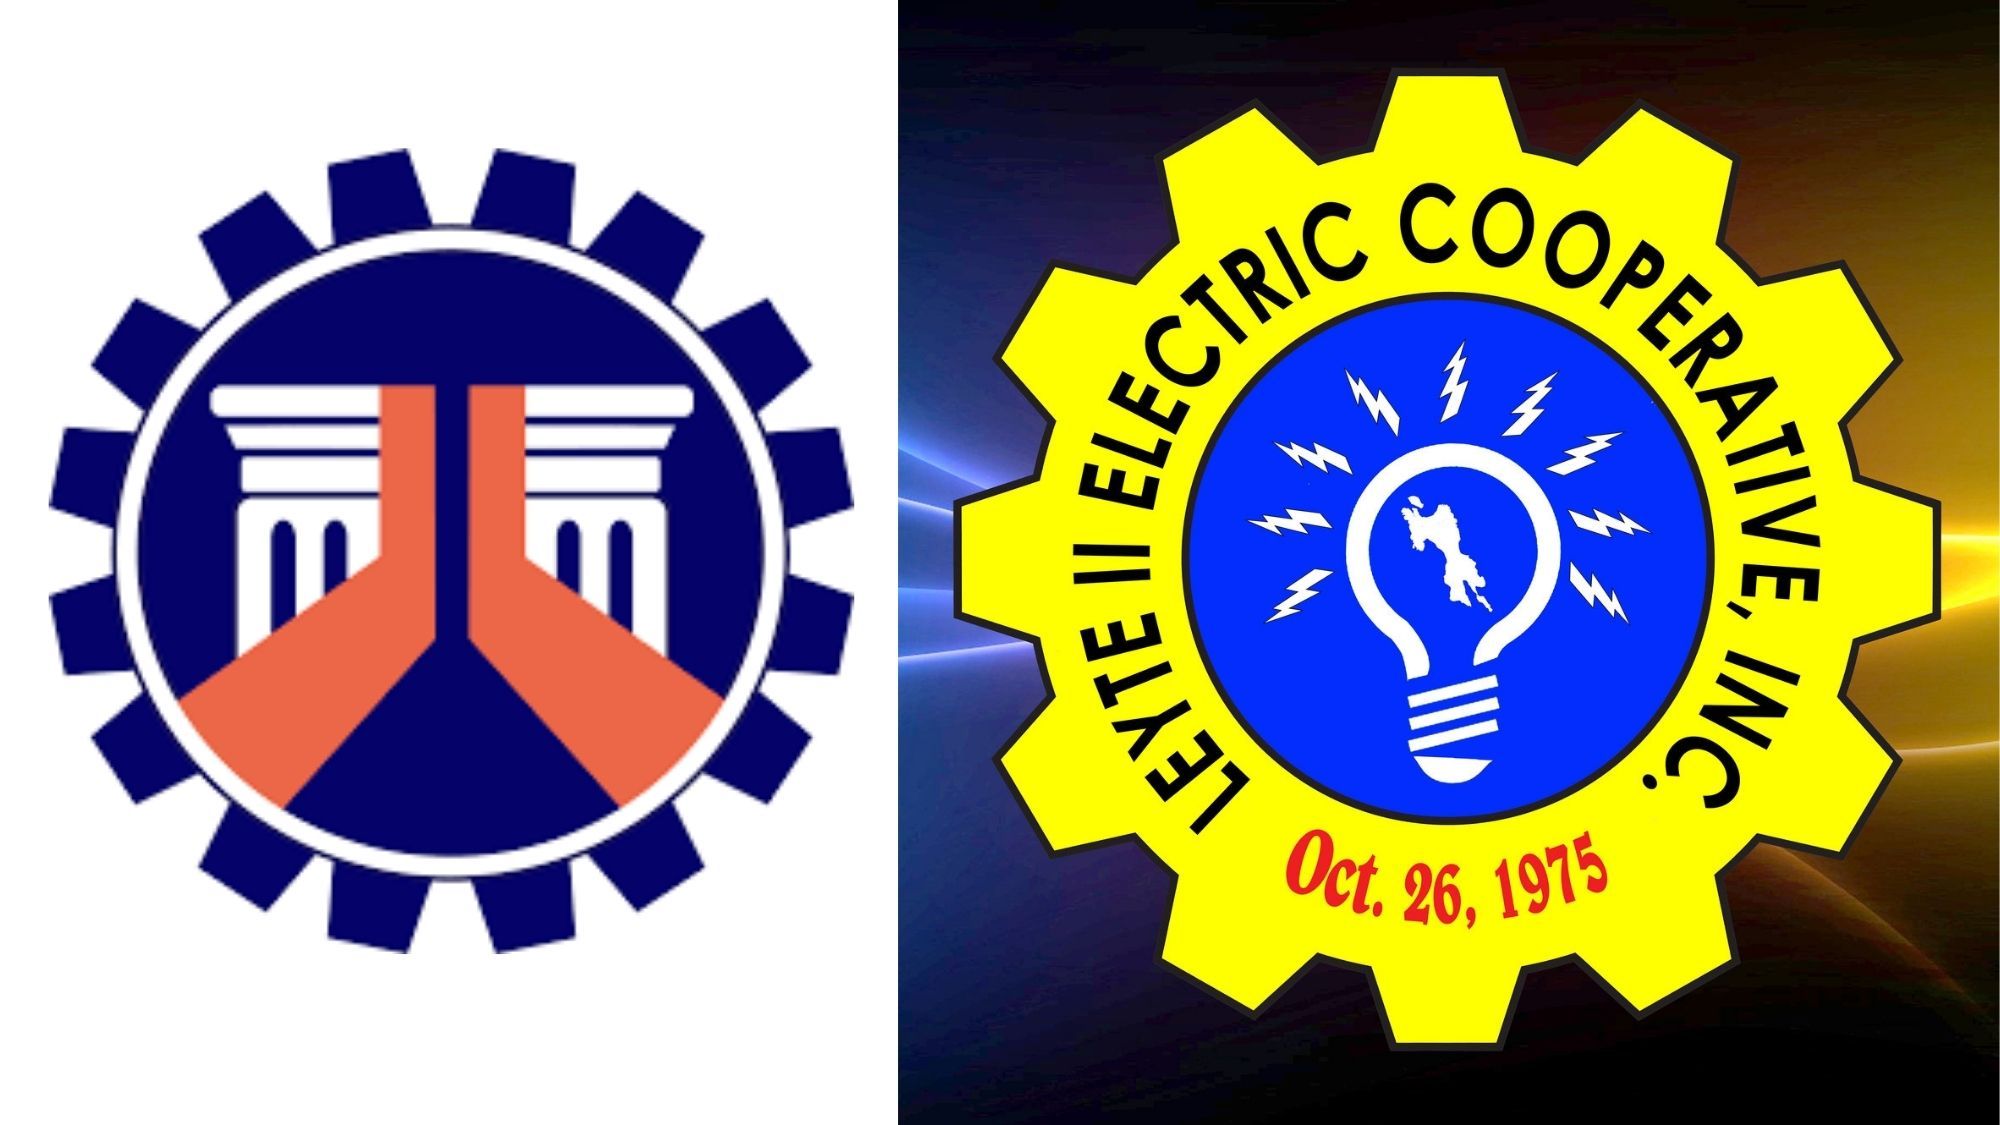 DPWH vs Electric Cooperatives